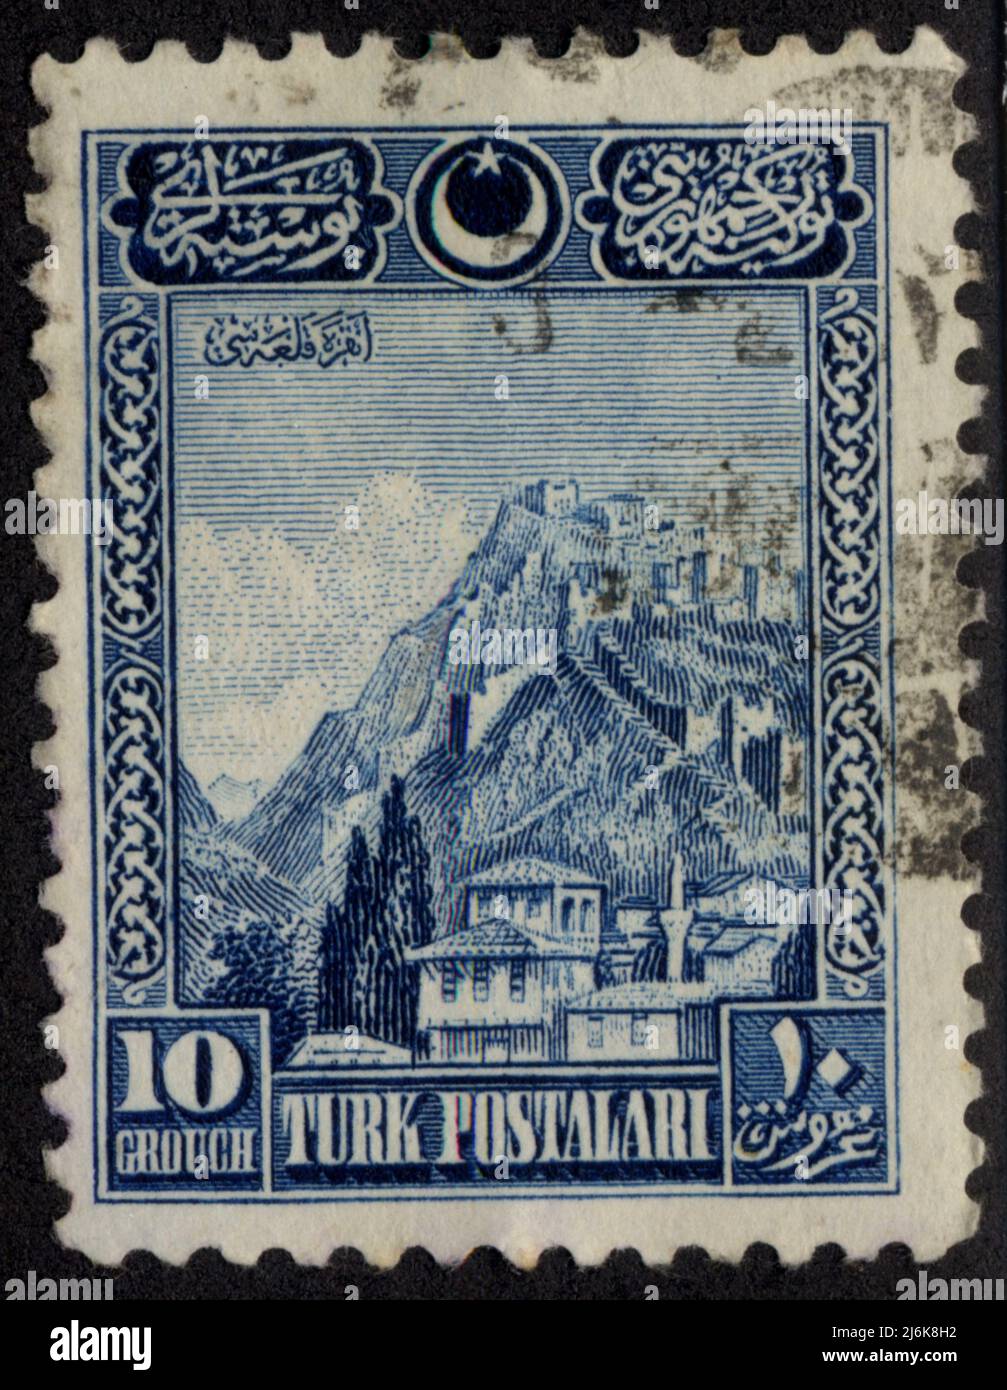 Timbre oblitéré Turk Postalari, 10 Grouch Stockfoto